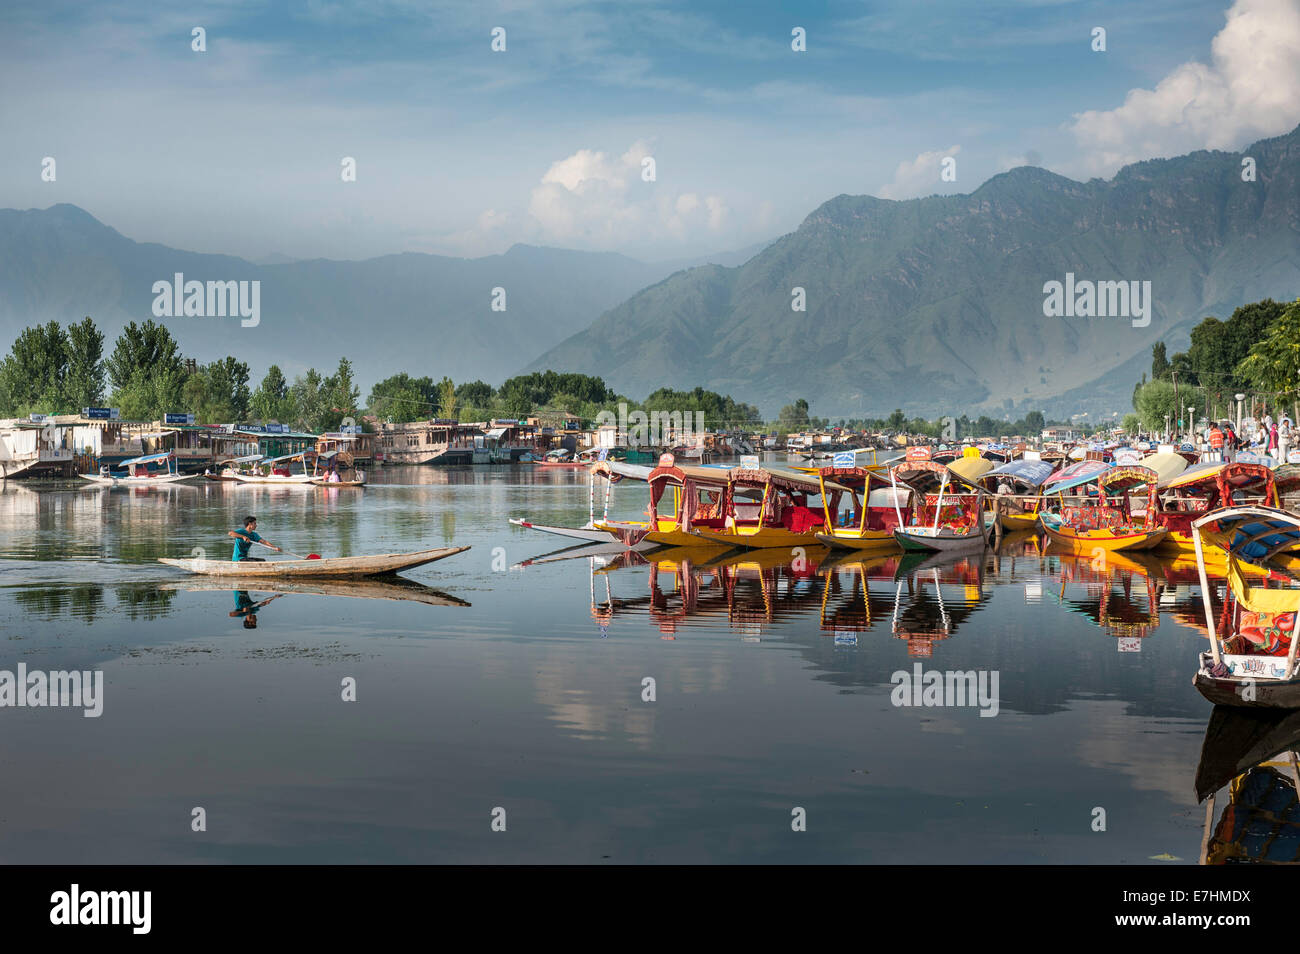 Kashmir, Dal Lake, Boat, House boat, 'Jammu & Kashmir', Srinagar, Shikara, Tourists Stock Photo